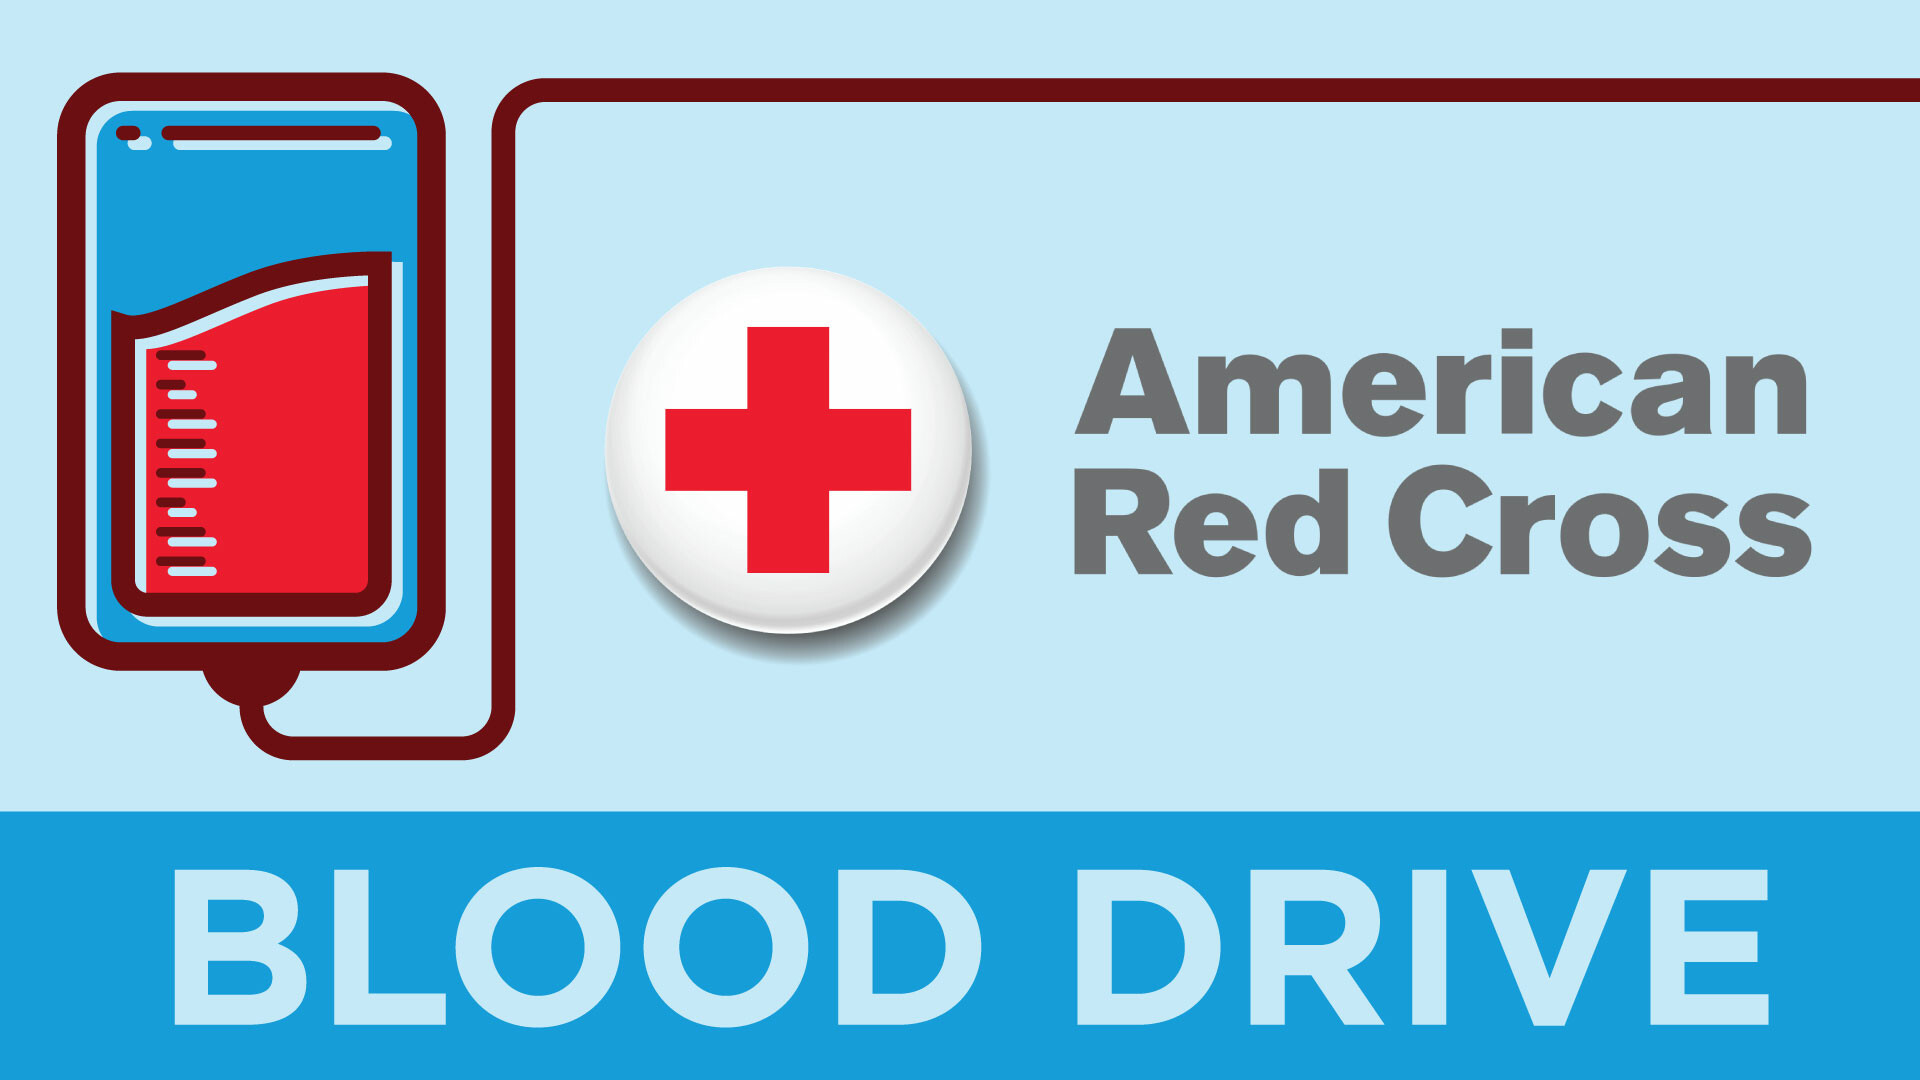 Red Cross Blood Drive - Jun 7 2022 1:00 PM